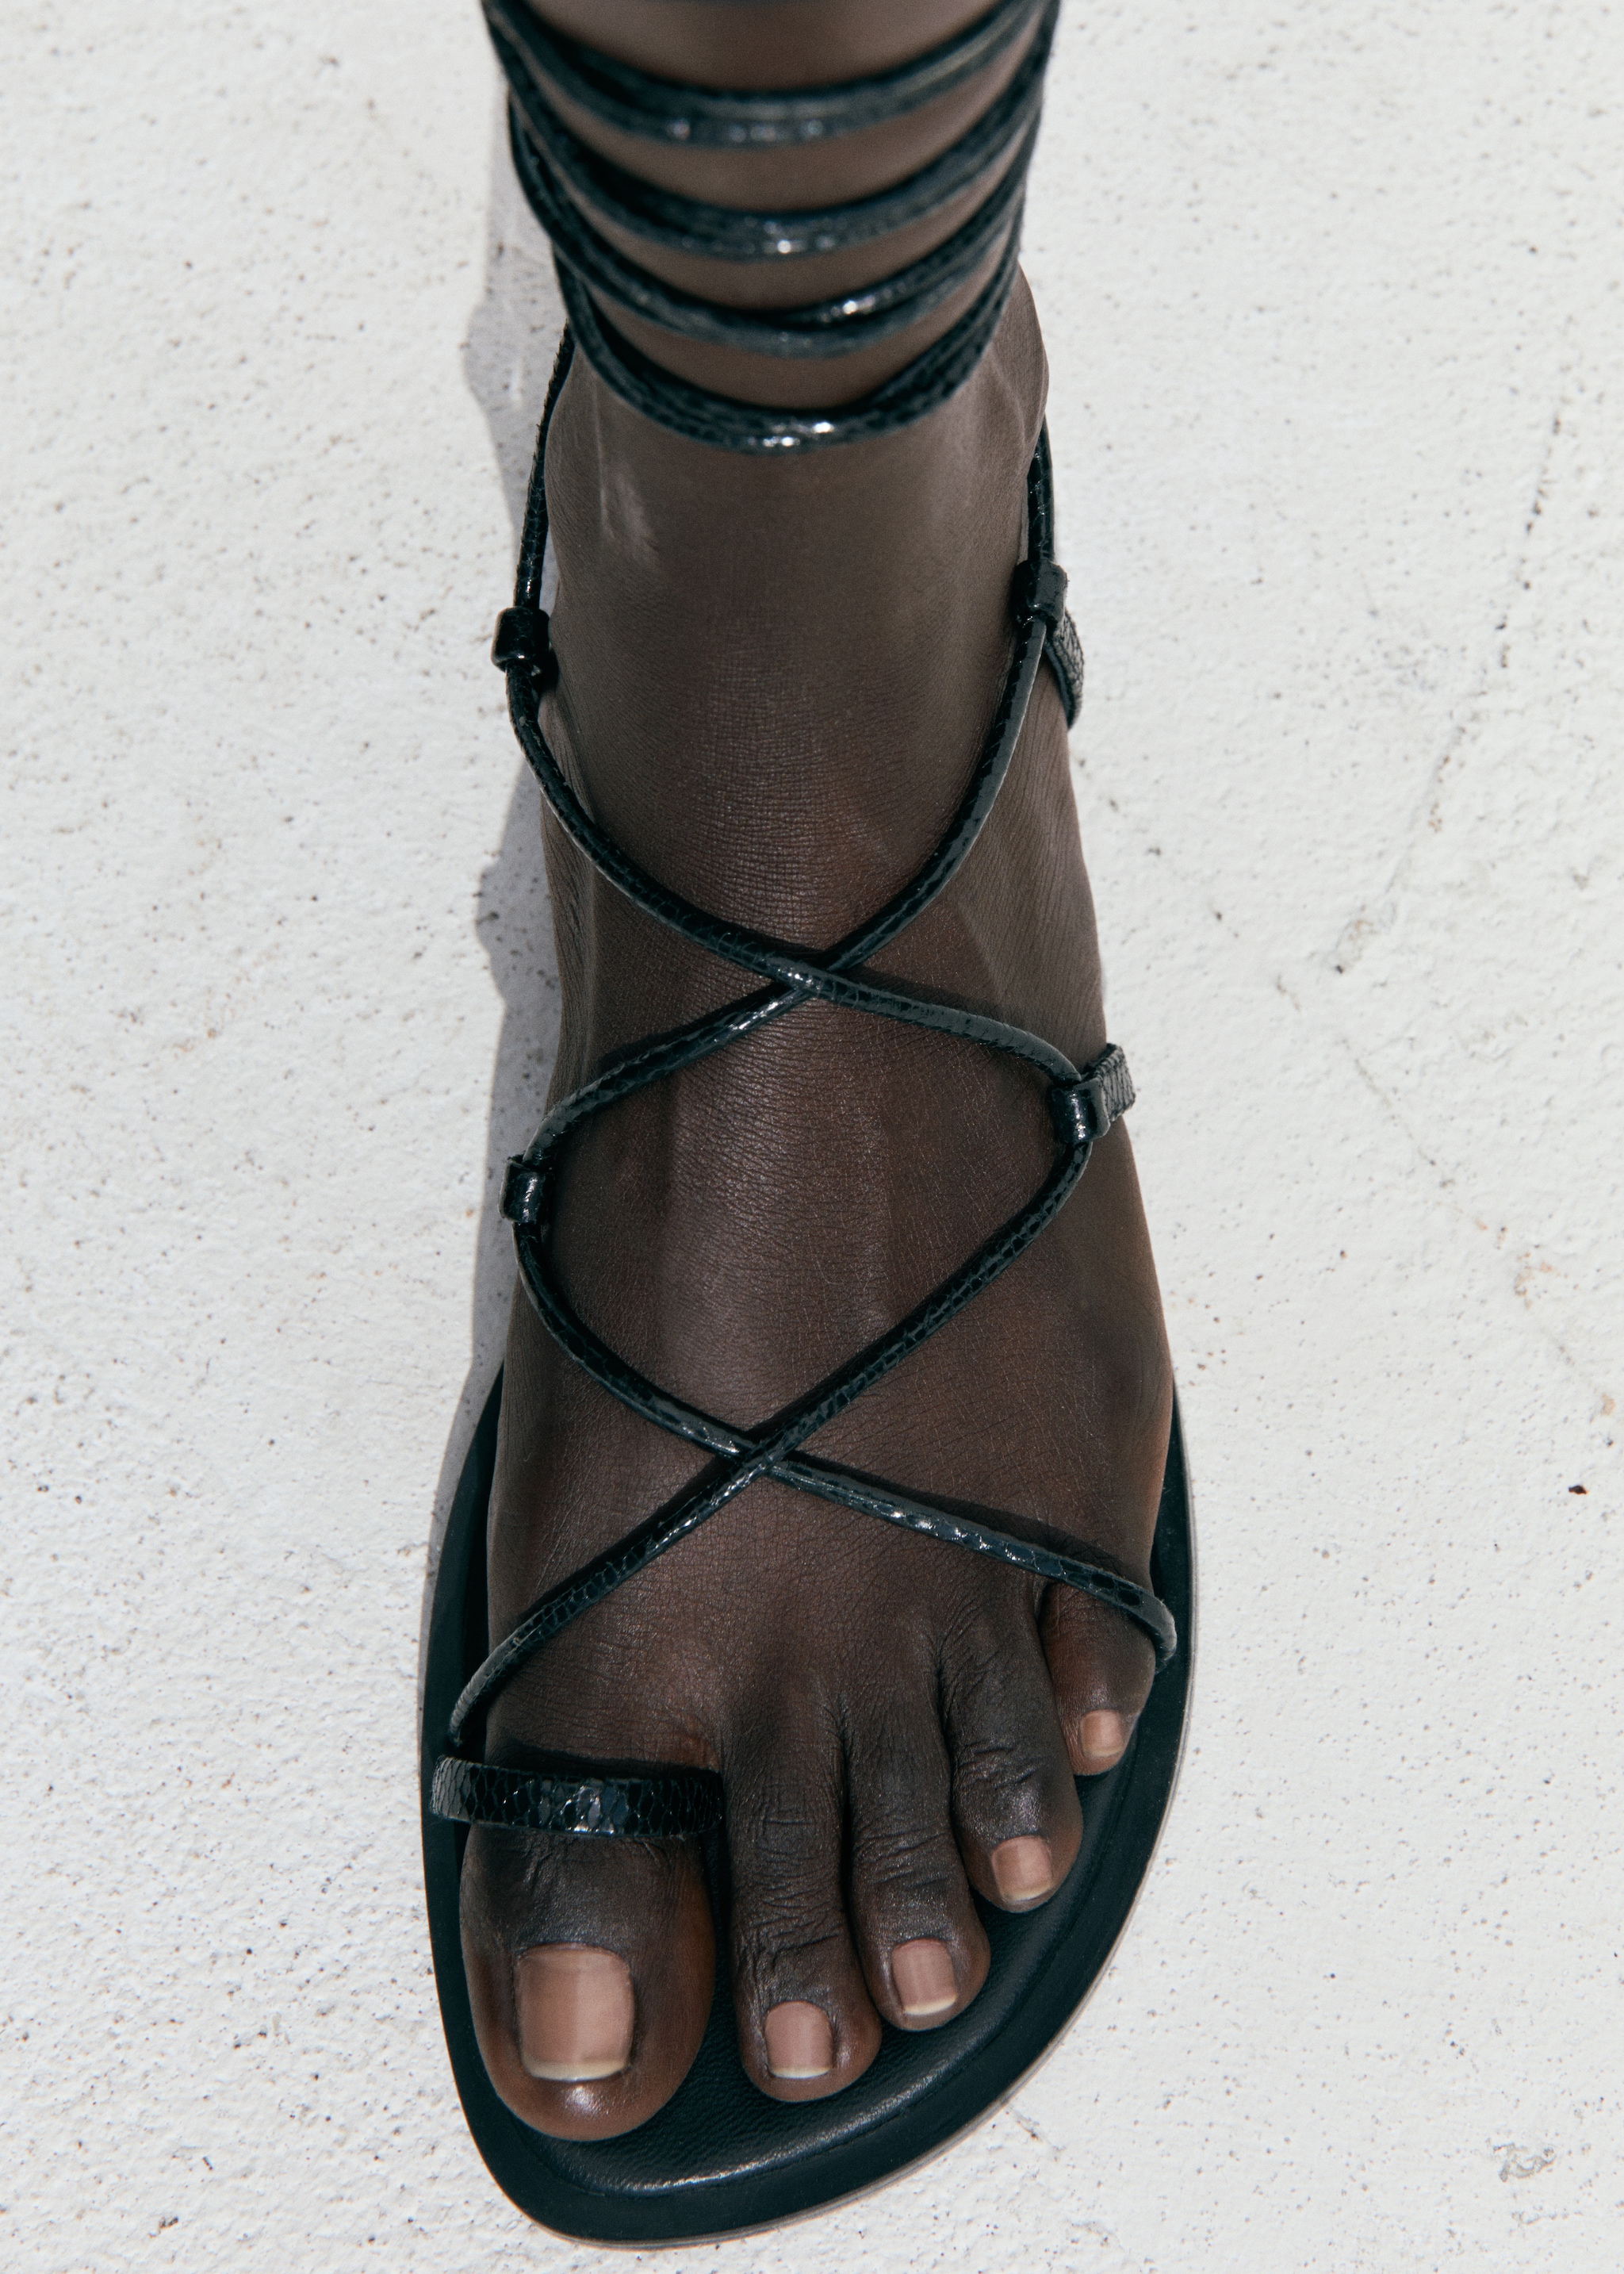 Leather straps sandals - General plane